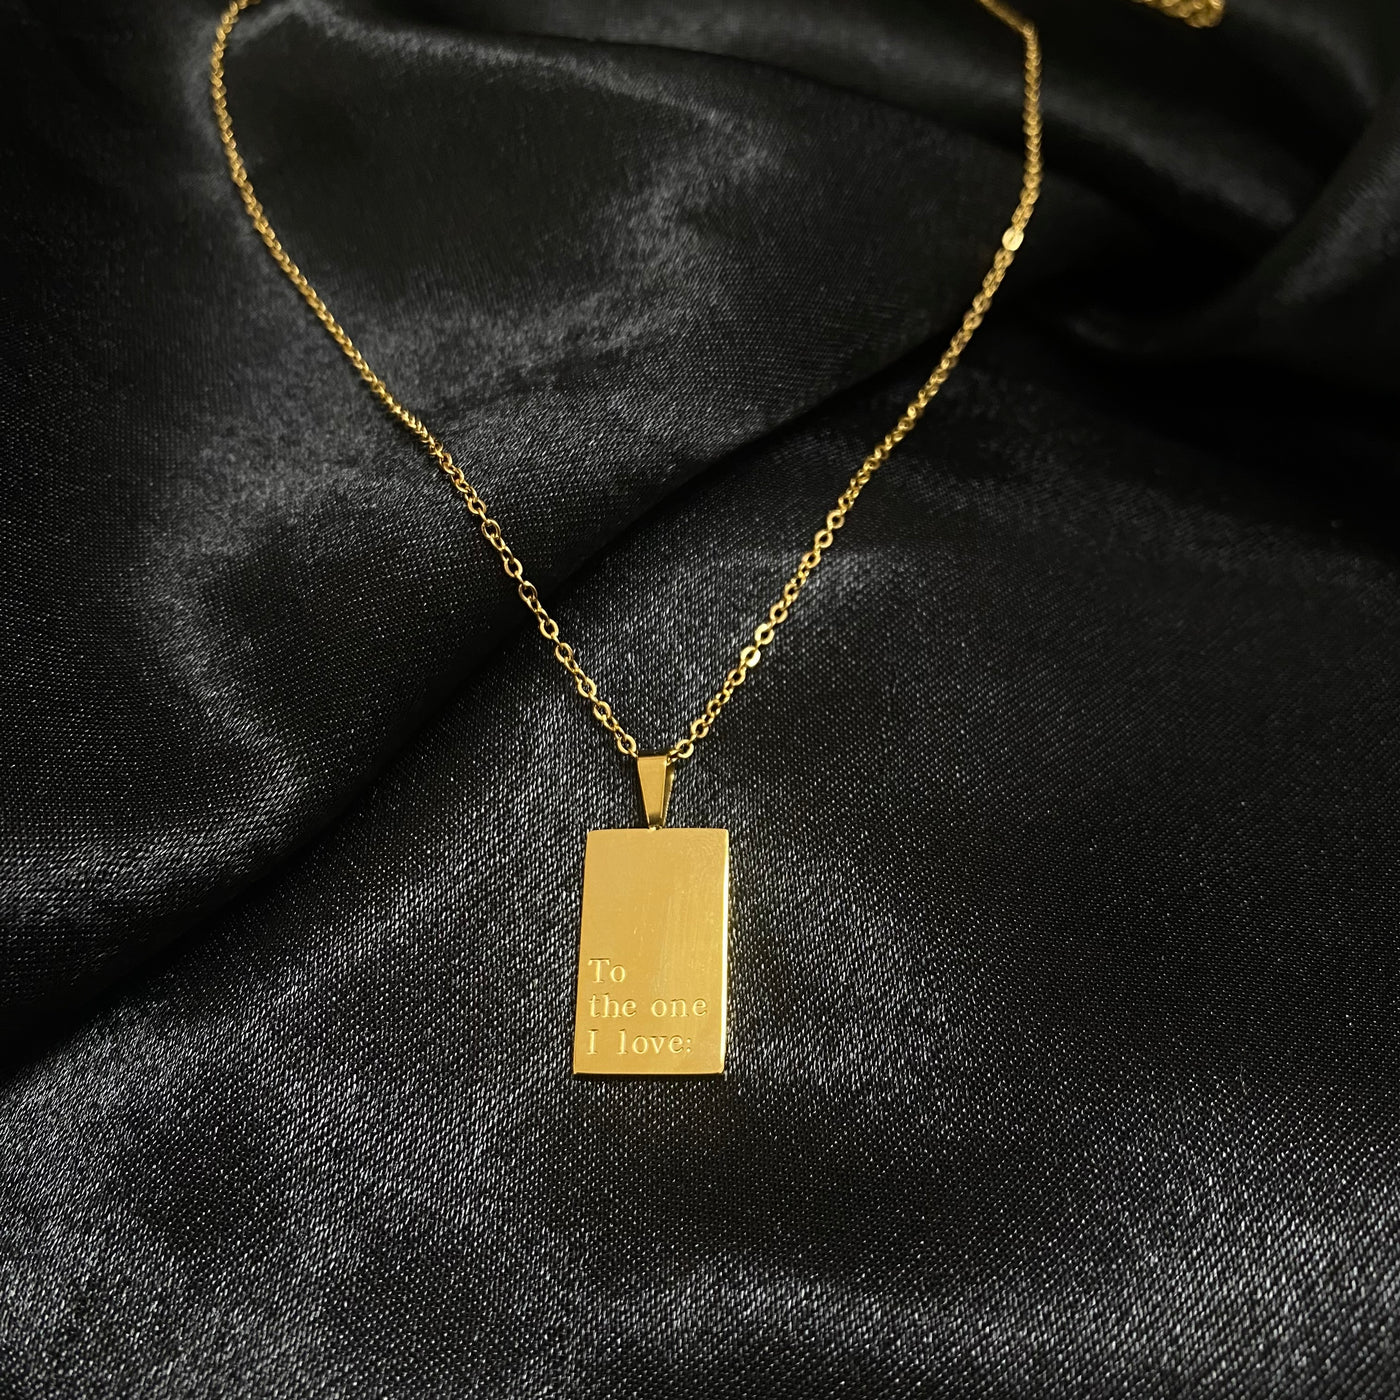 Collar Eva de rectángulo con frase “To the one I love” de acero inoxidable con baño de oro de 18 K.